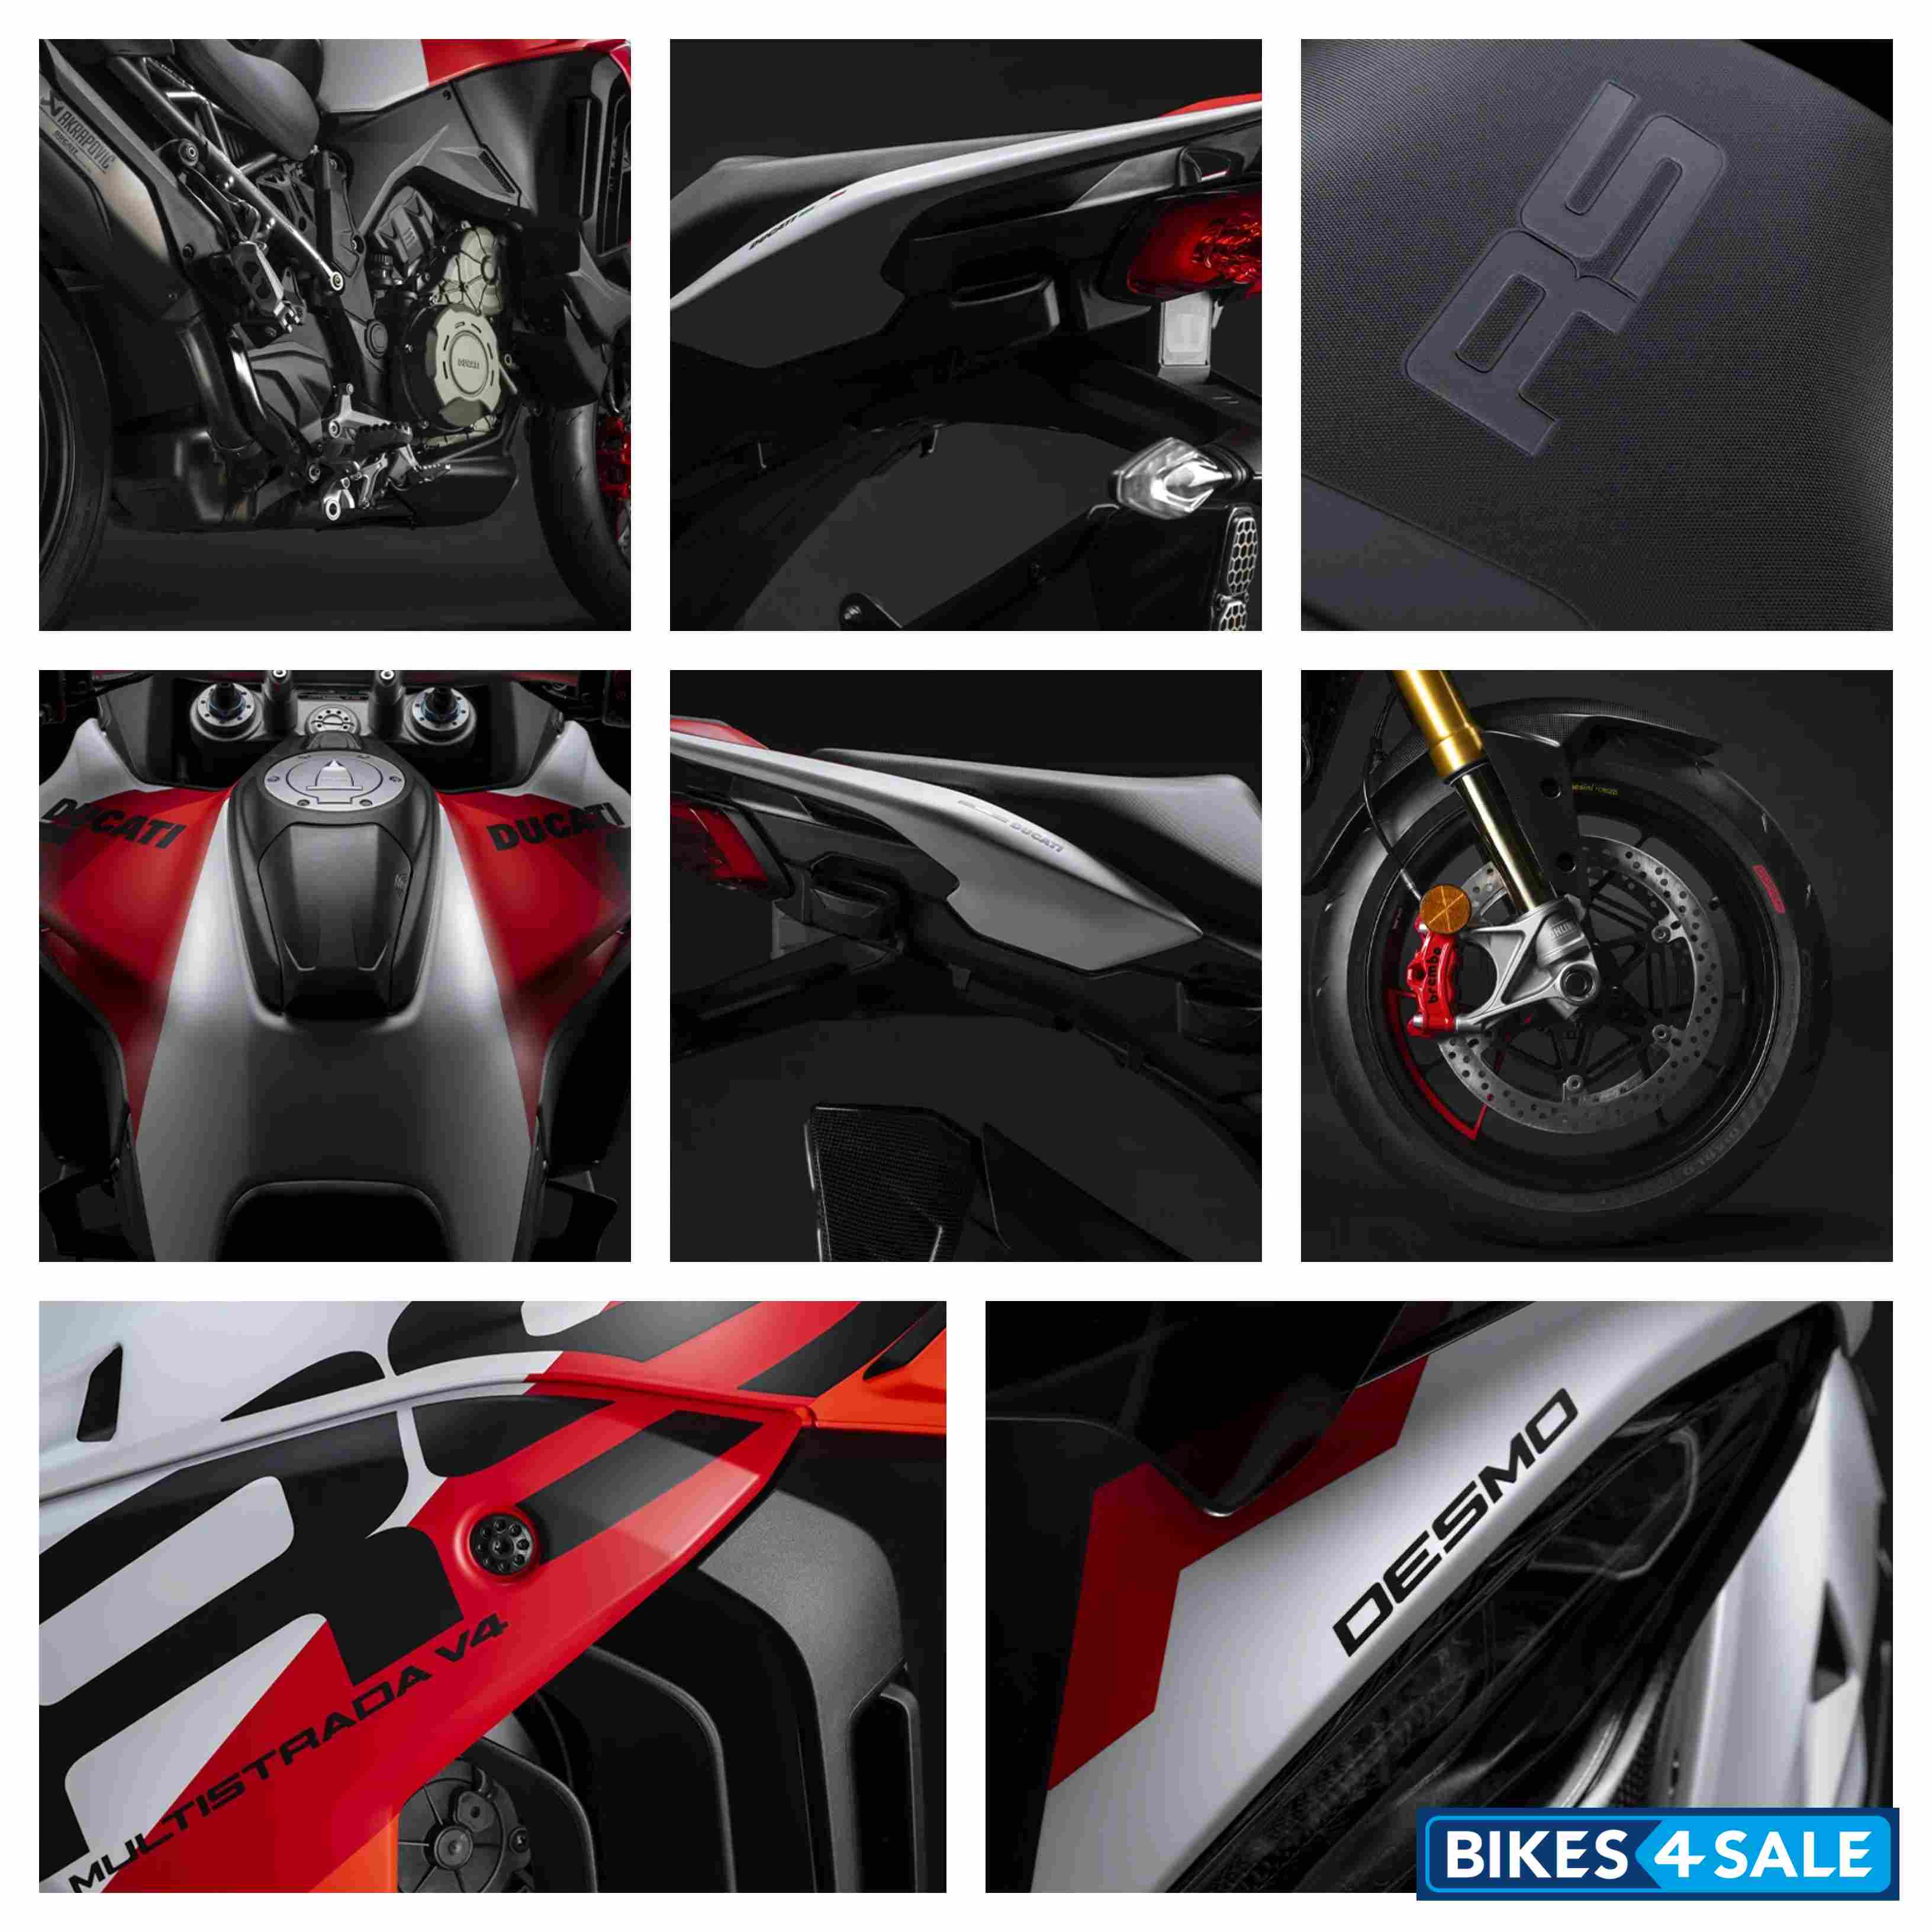 Ducati Multistrada V4 RS - Features